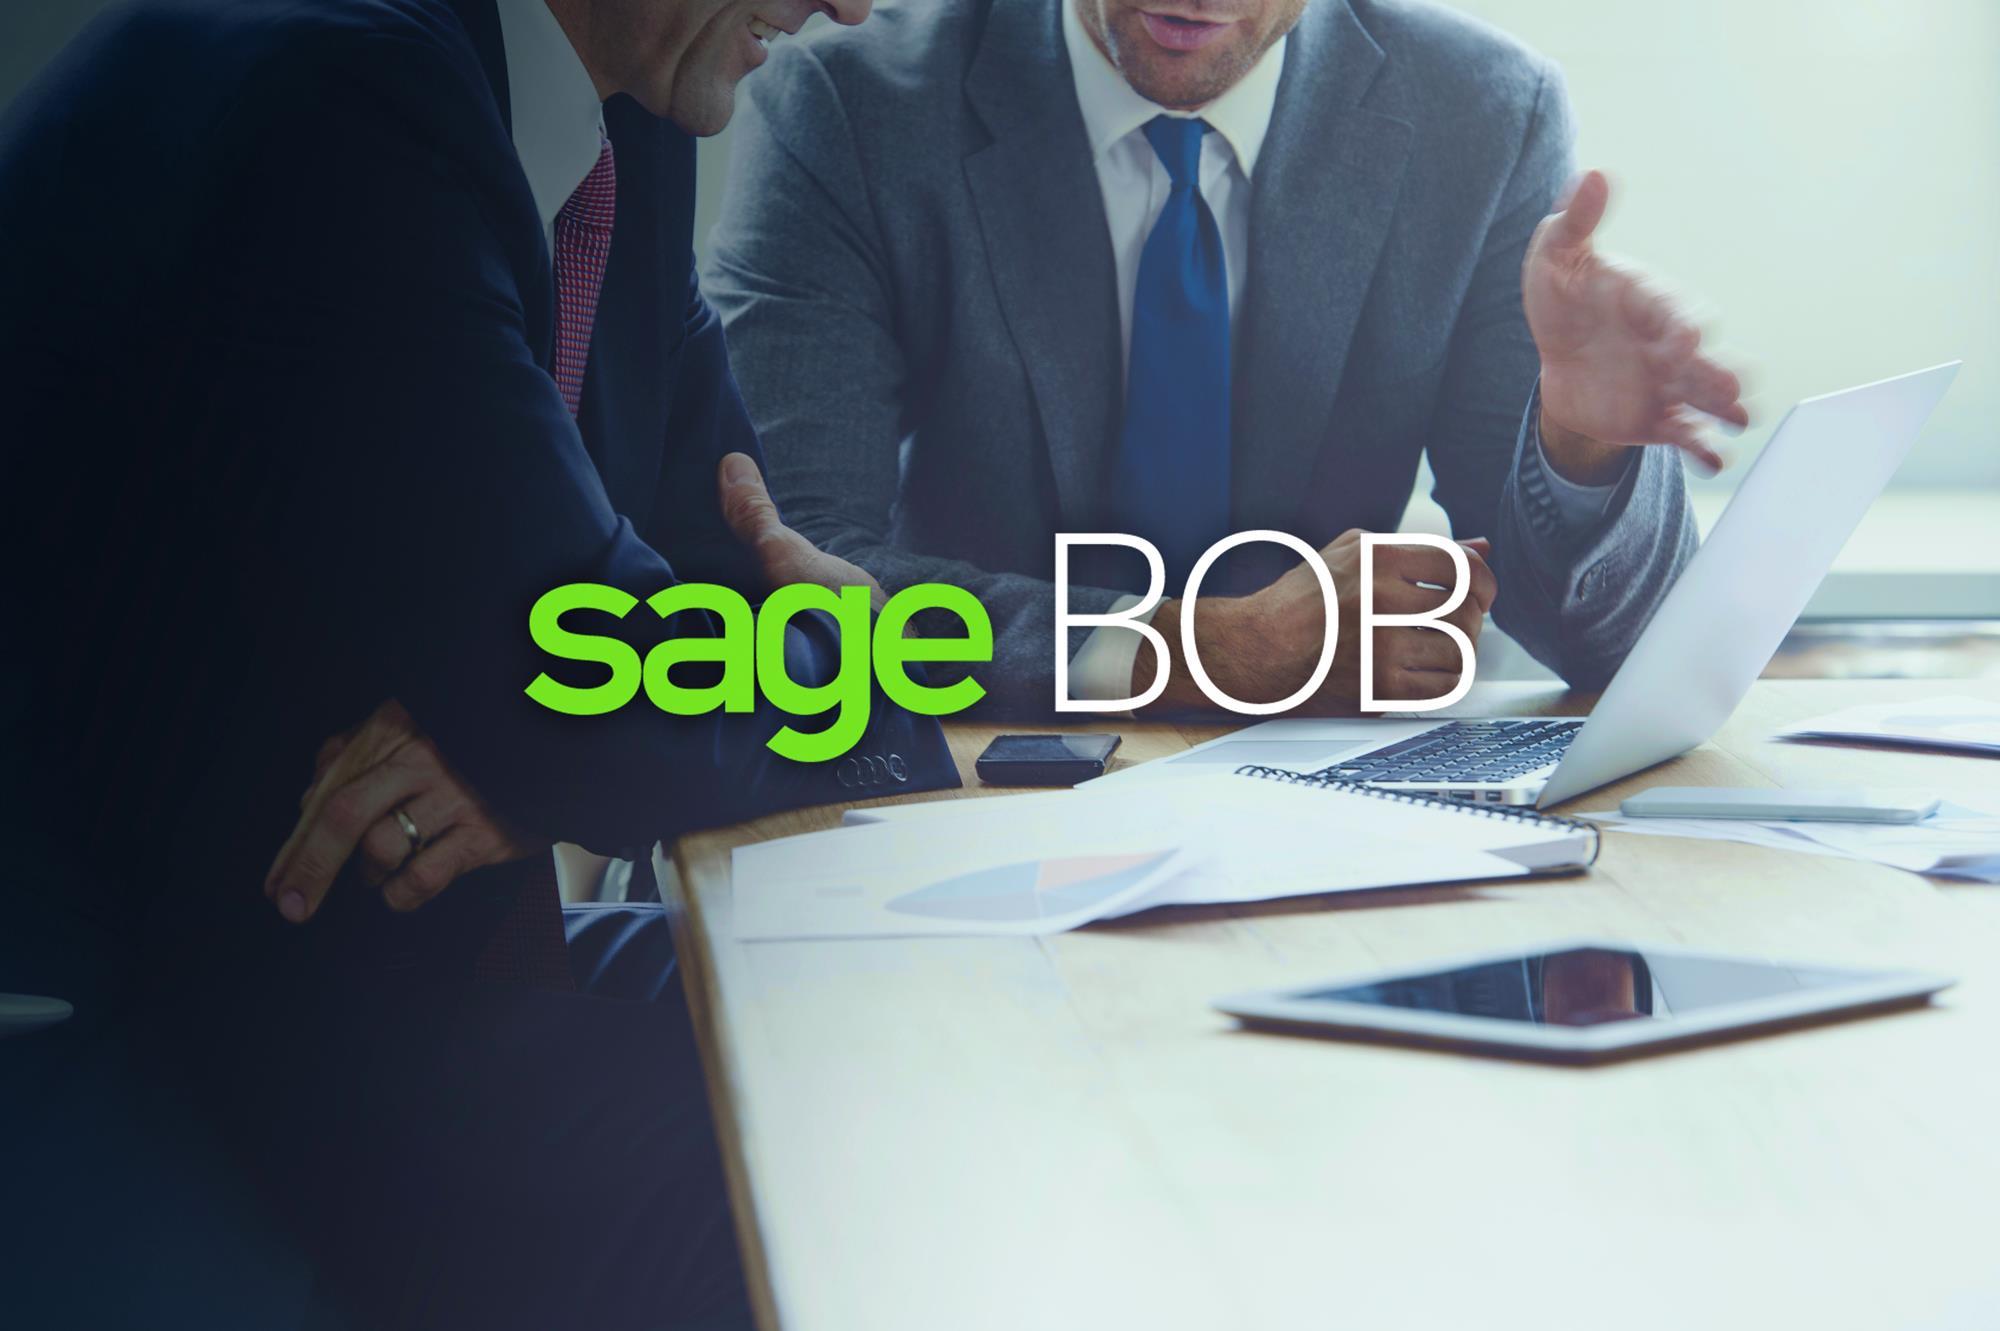 SAGE BOB KMU - Applikationen